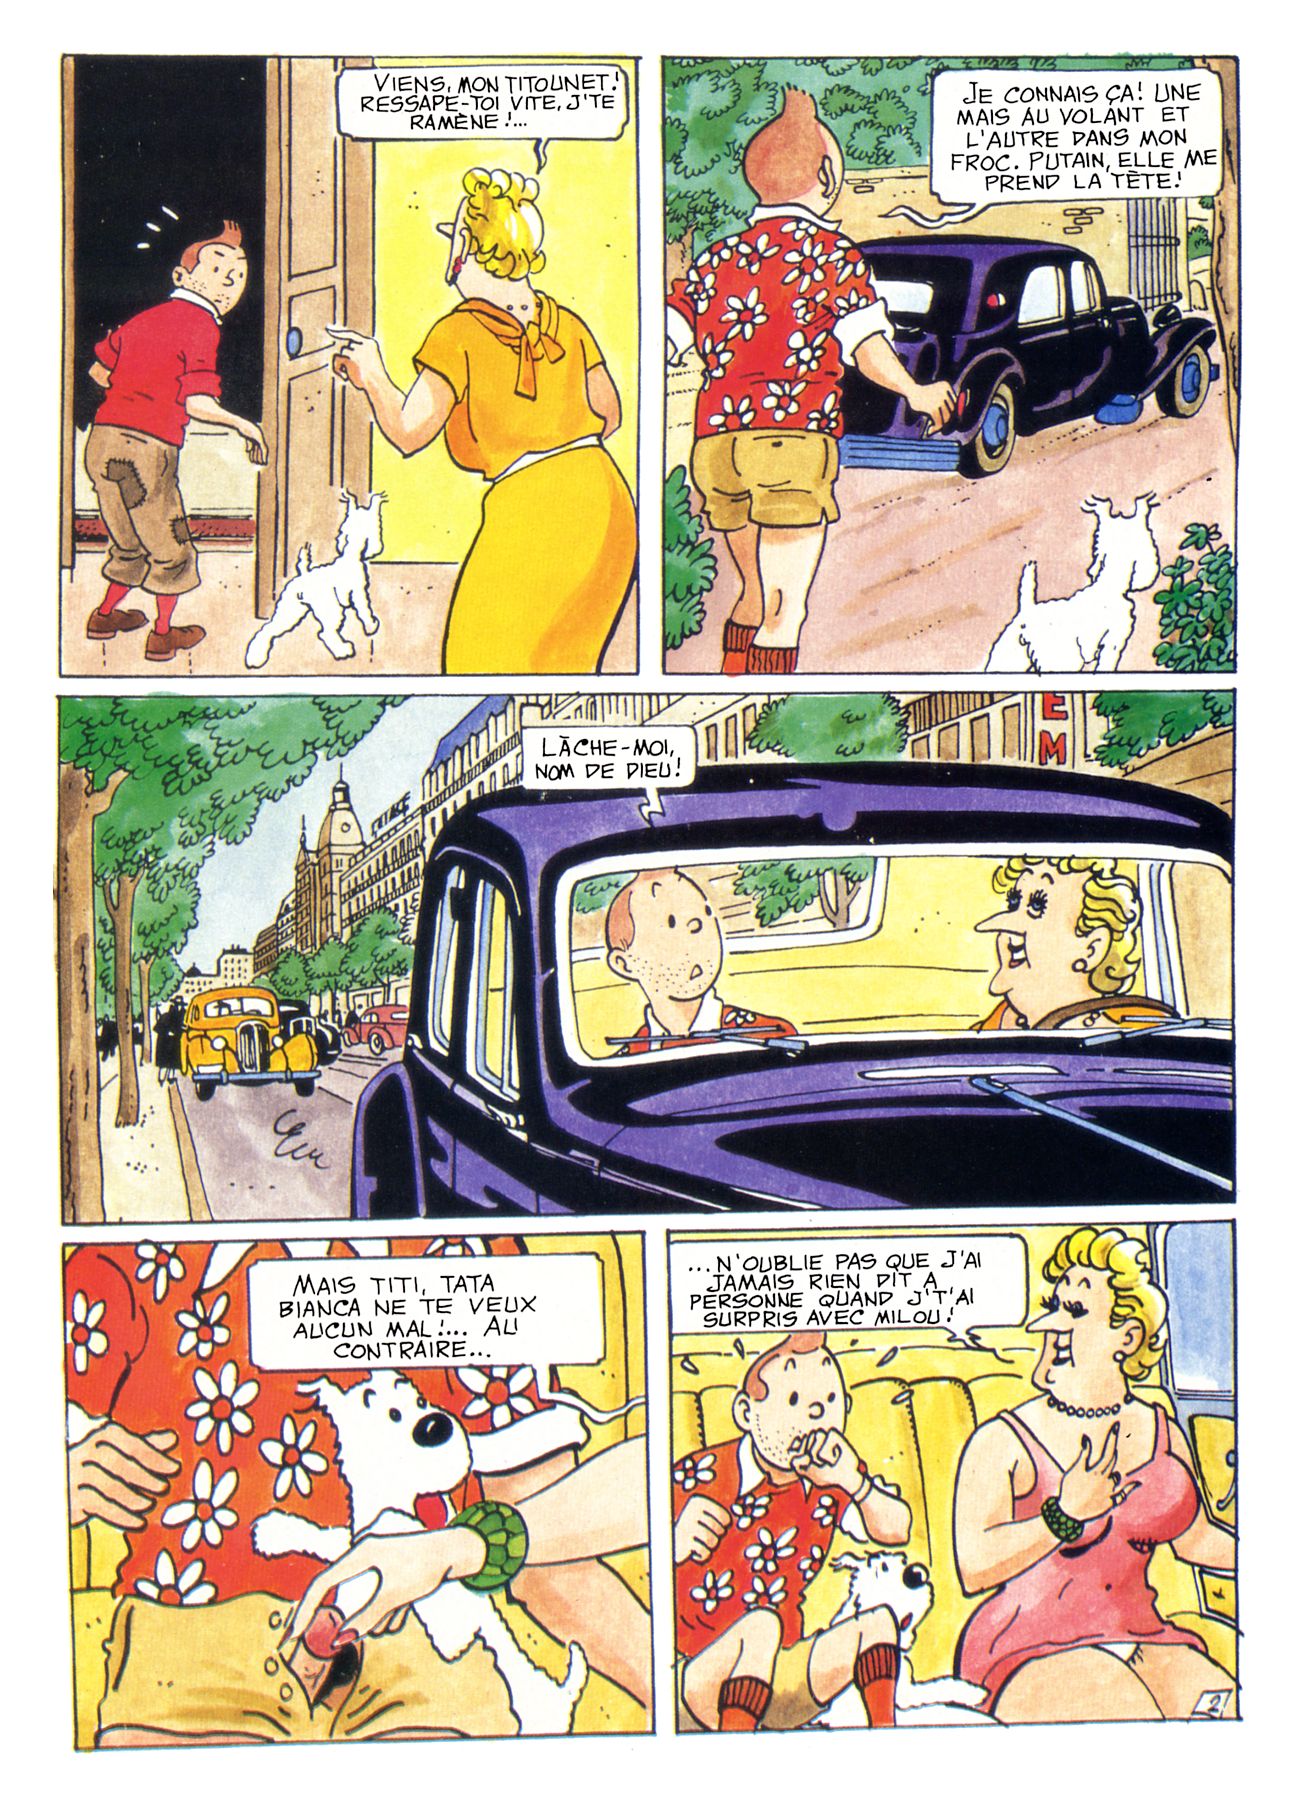 La-Vie-Sexuelle-De-Tintin-1992-All-64-pages-French-page02--Gotofap.tk--76215000.jpg